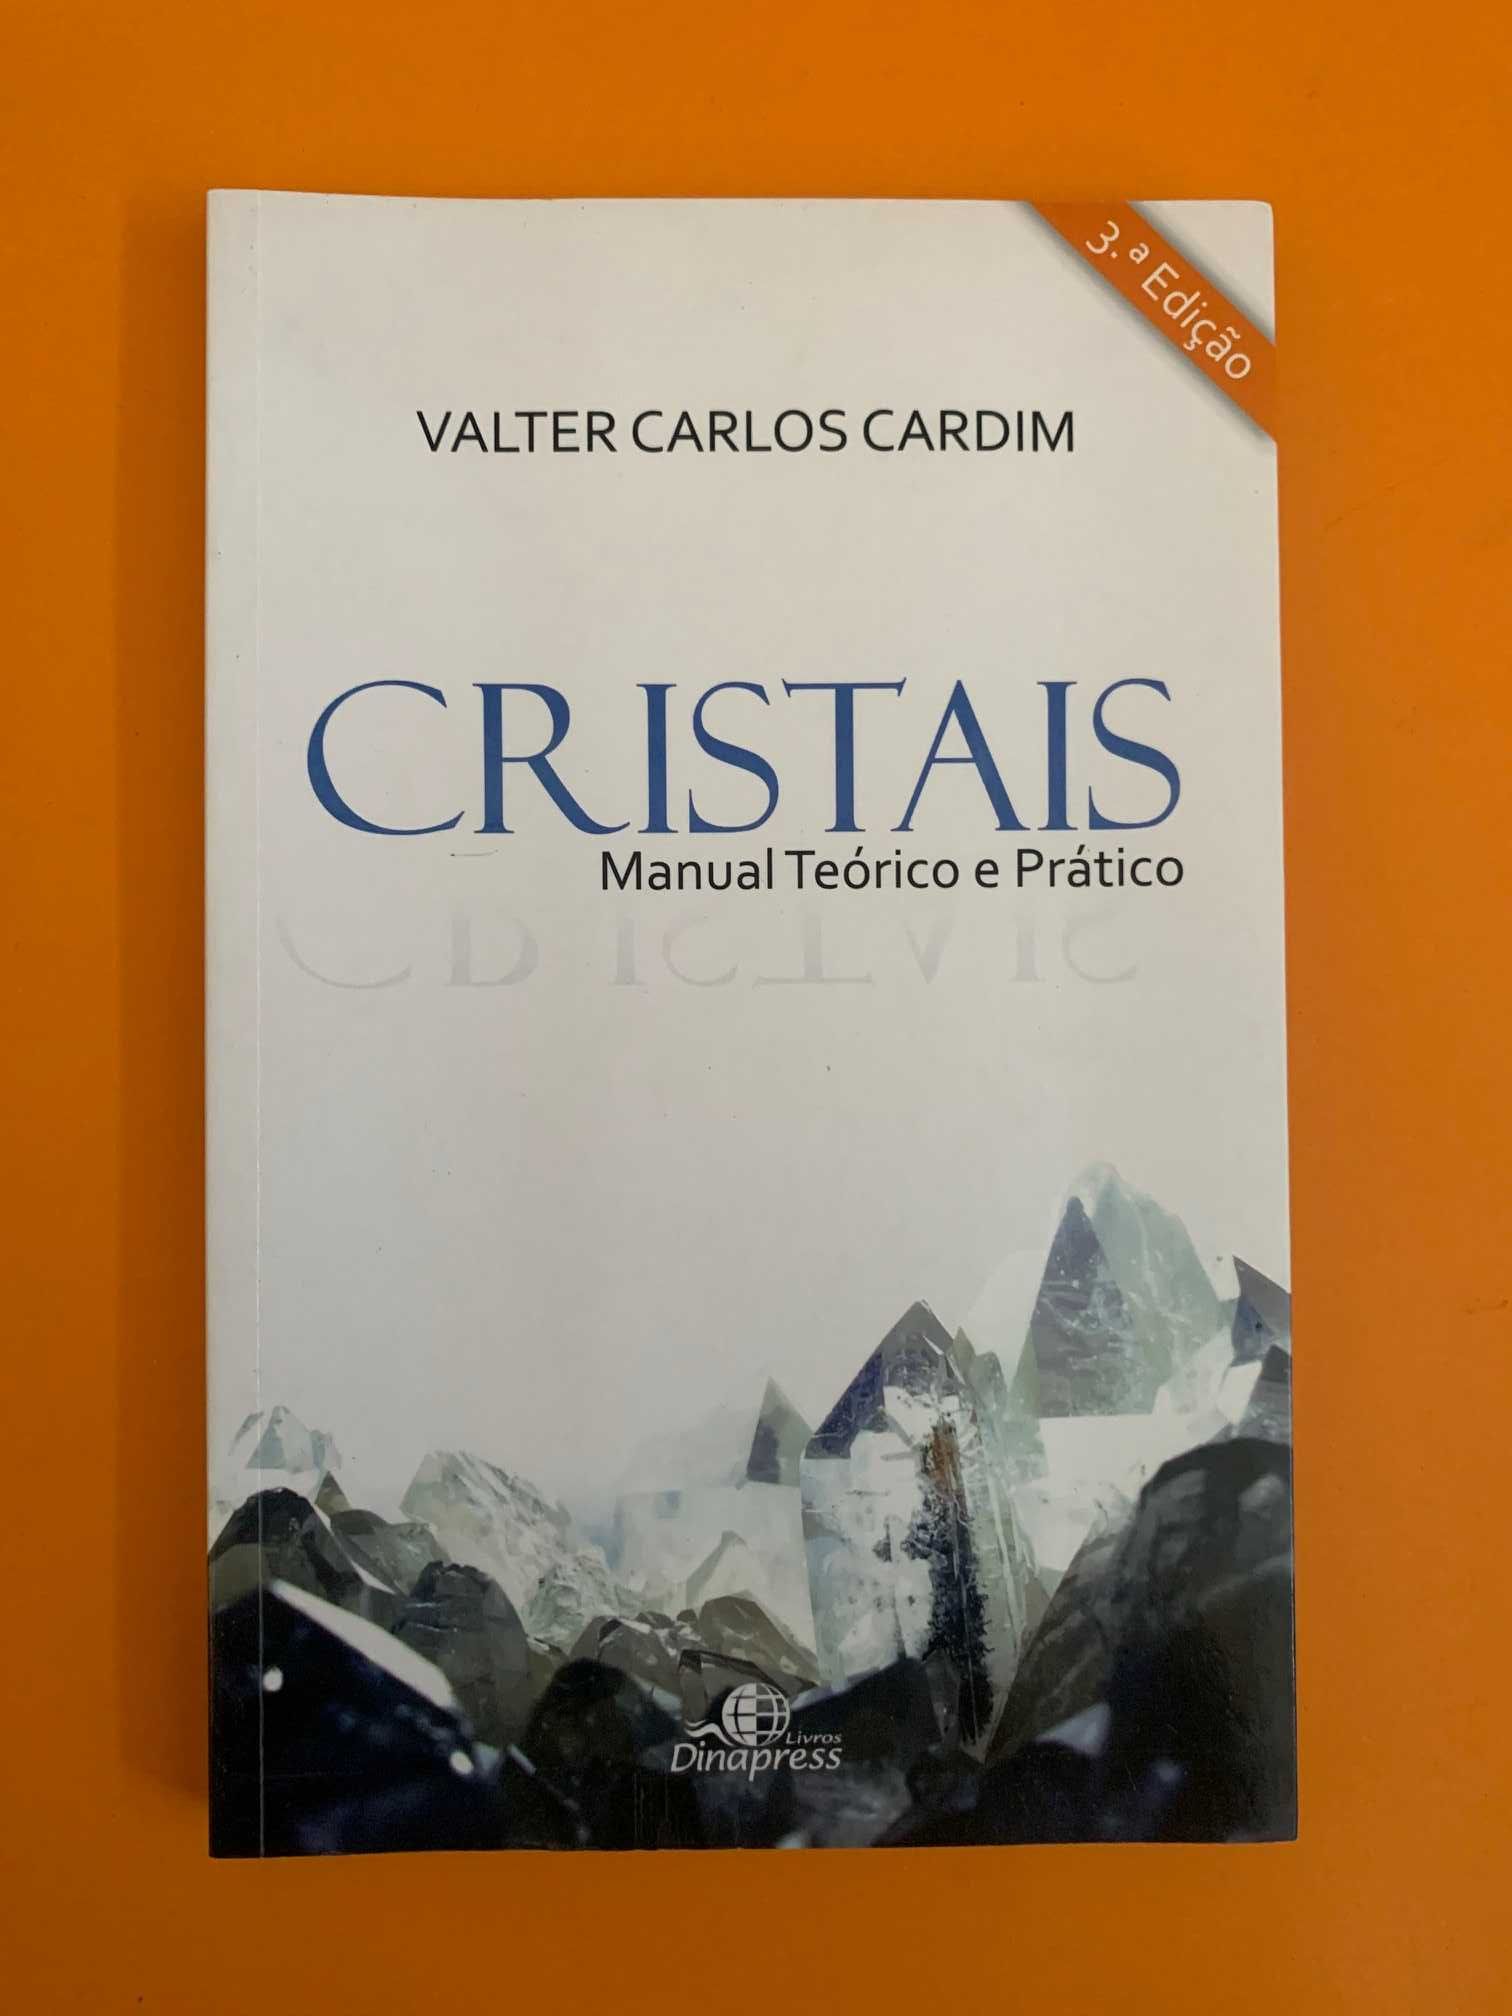 Cristais: Manual Teórico e Prático - Valter Carlos Cardim